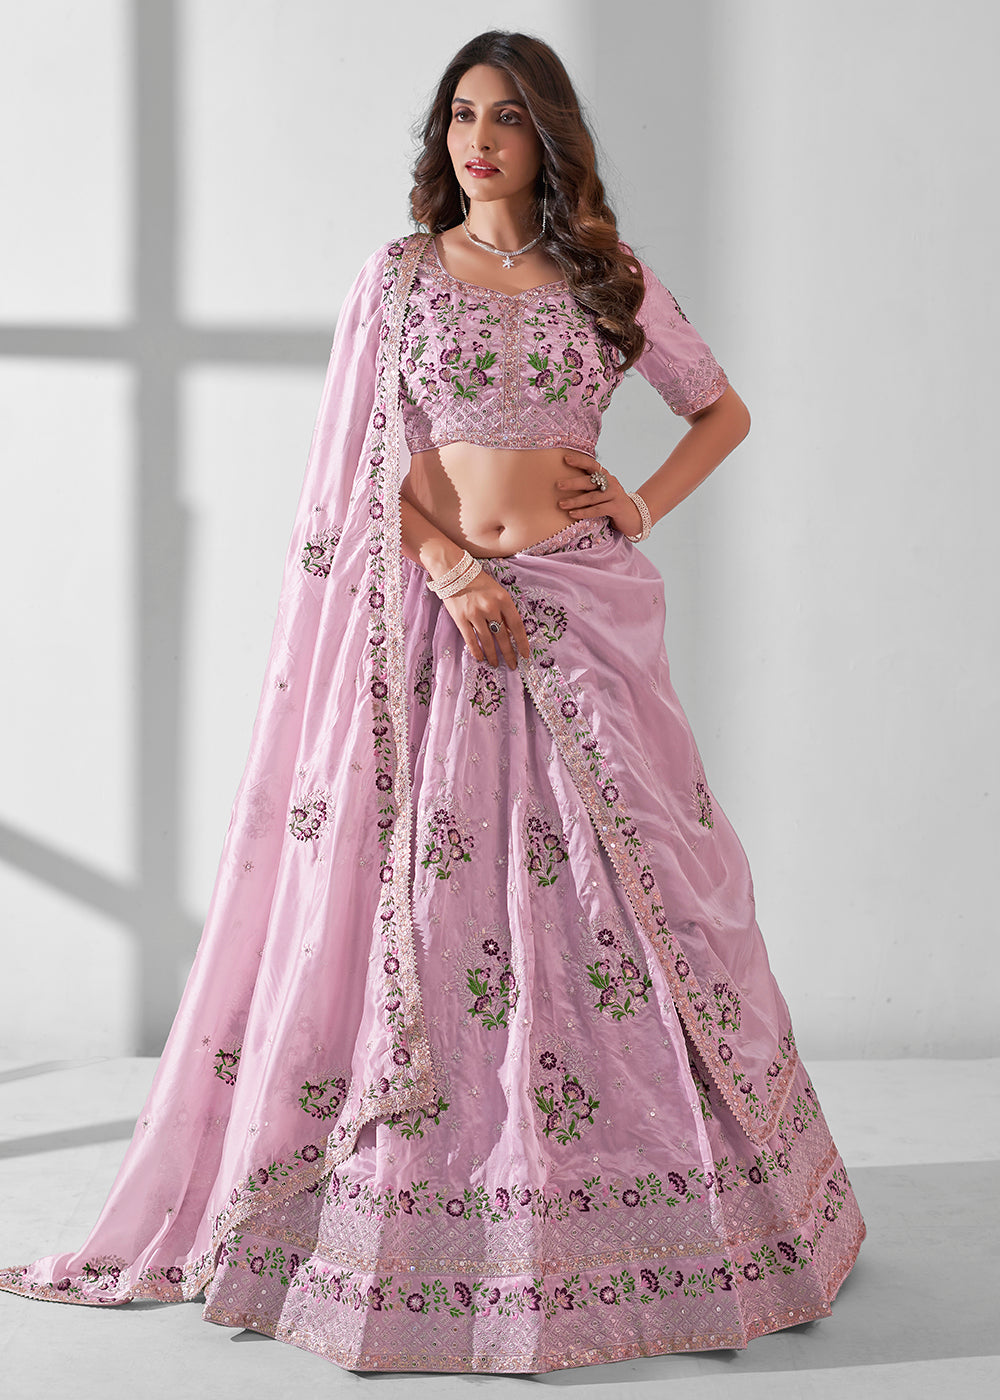 Buy Now Soft Pink Multi Embroidered Wedding Festive Lehenga Choli Online in USA, UK, Canada & Worldwide at Empress Clothing.